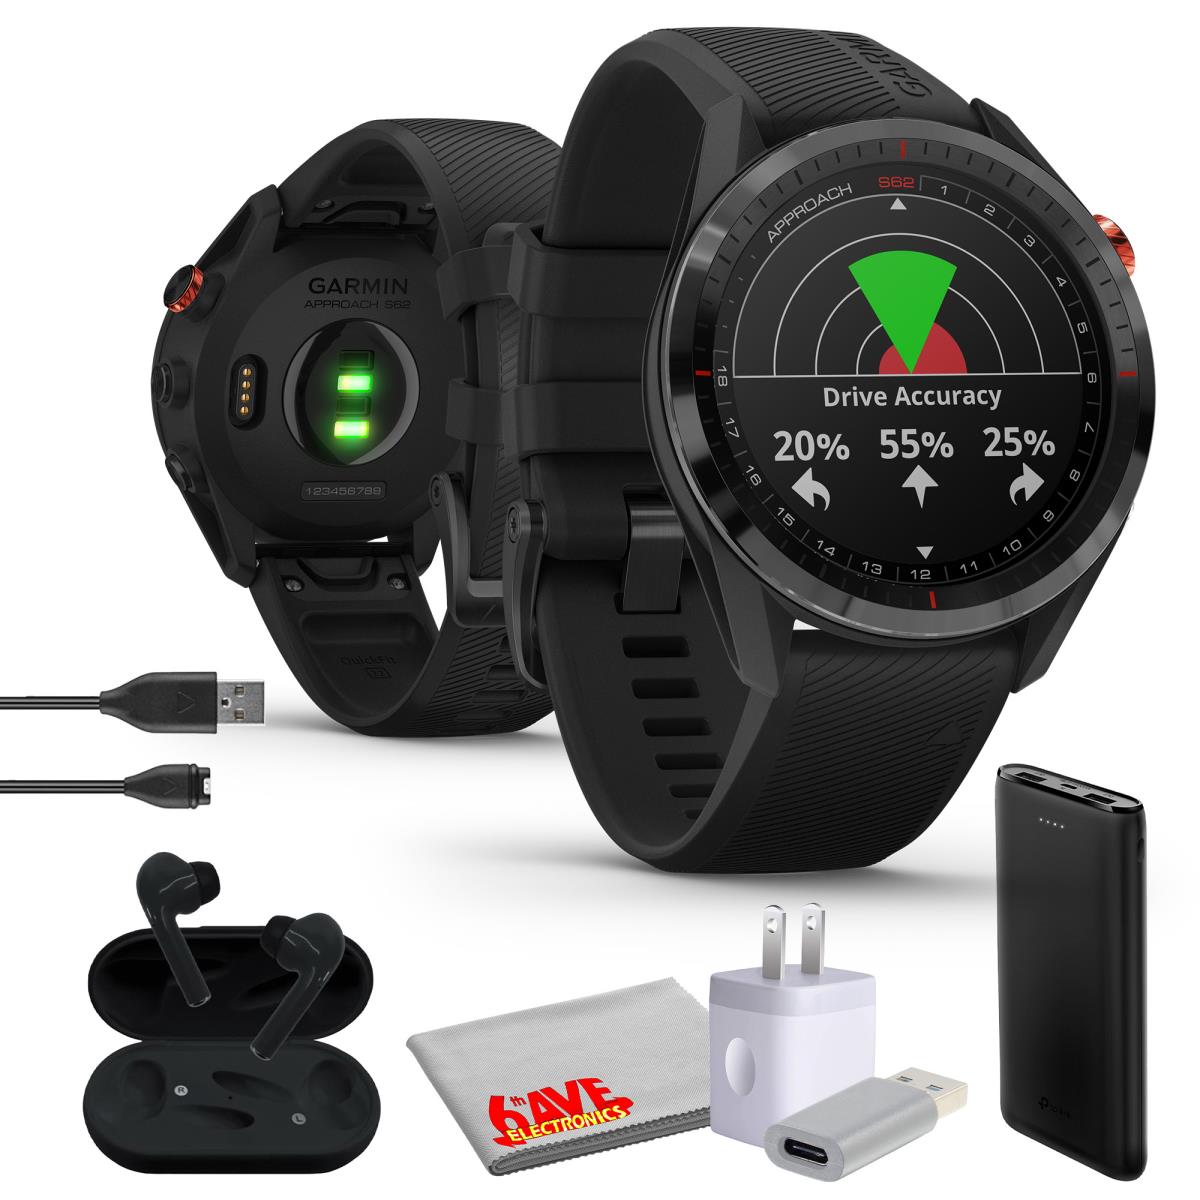 Garmin Approach S62 Premium Gps Golf Watch - Black Built-in Virtual Caddie